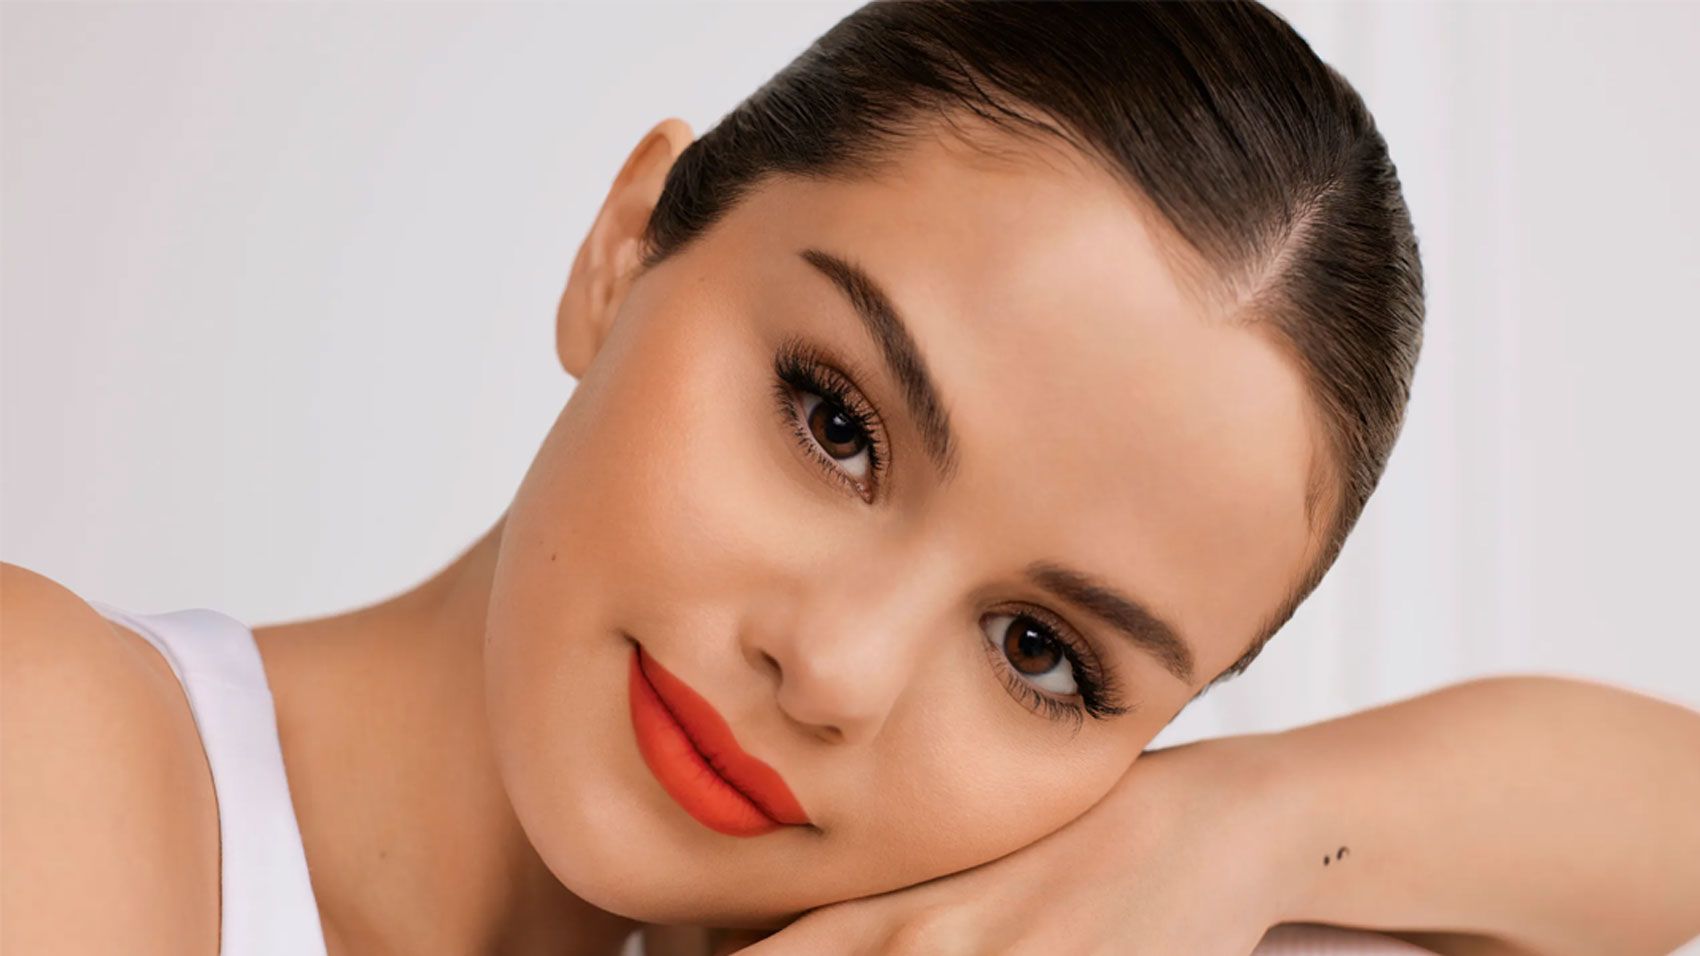 Celebrity makeup/beauty brands……let's talk about them 🤔